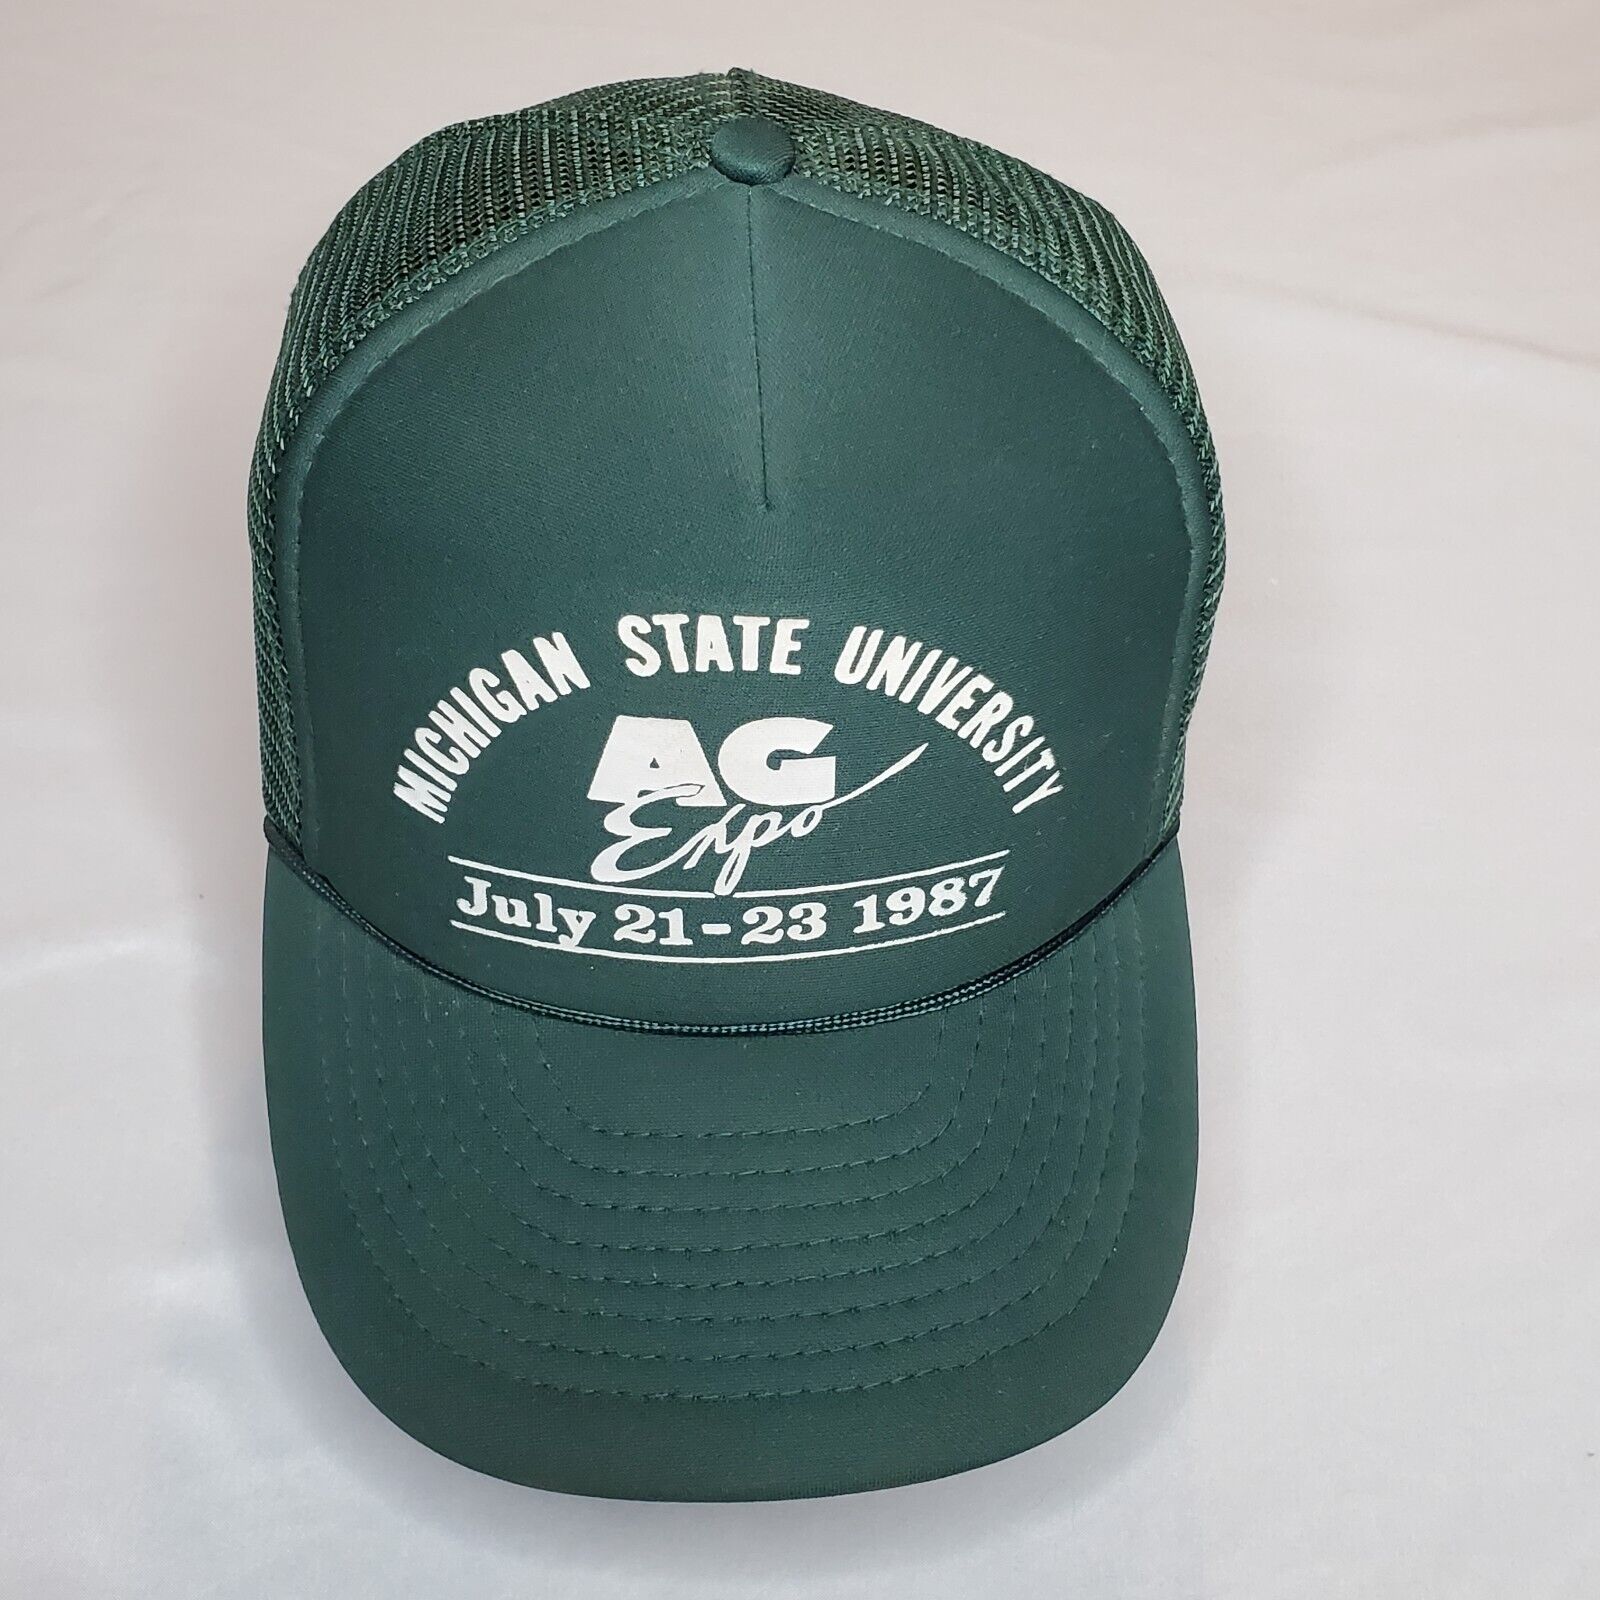 Vintage Michigan State University Hat 1987 AG EXPO Trucker Hat Adjustable Green